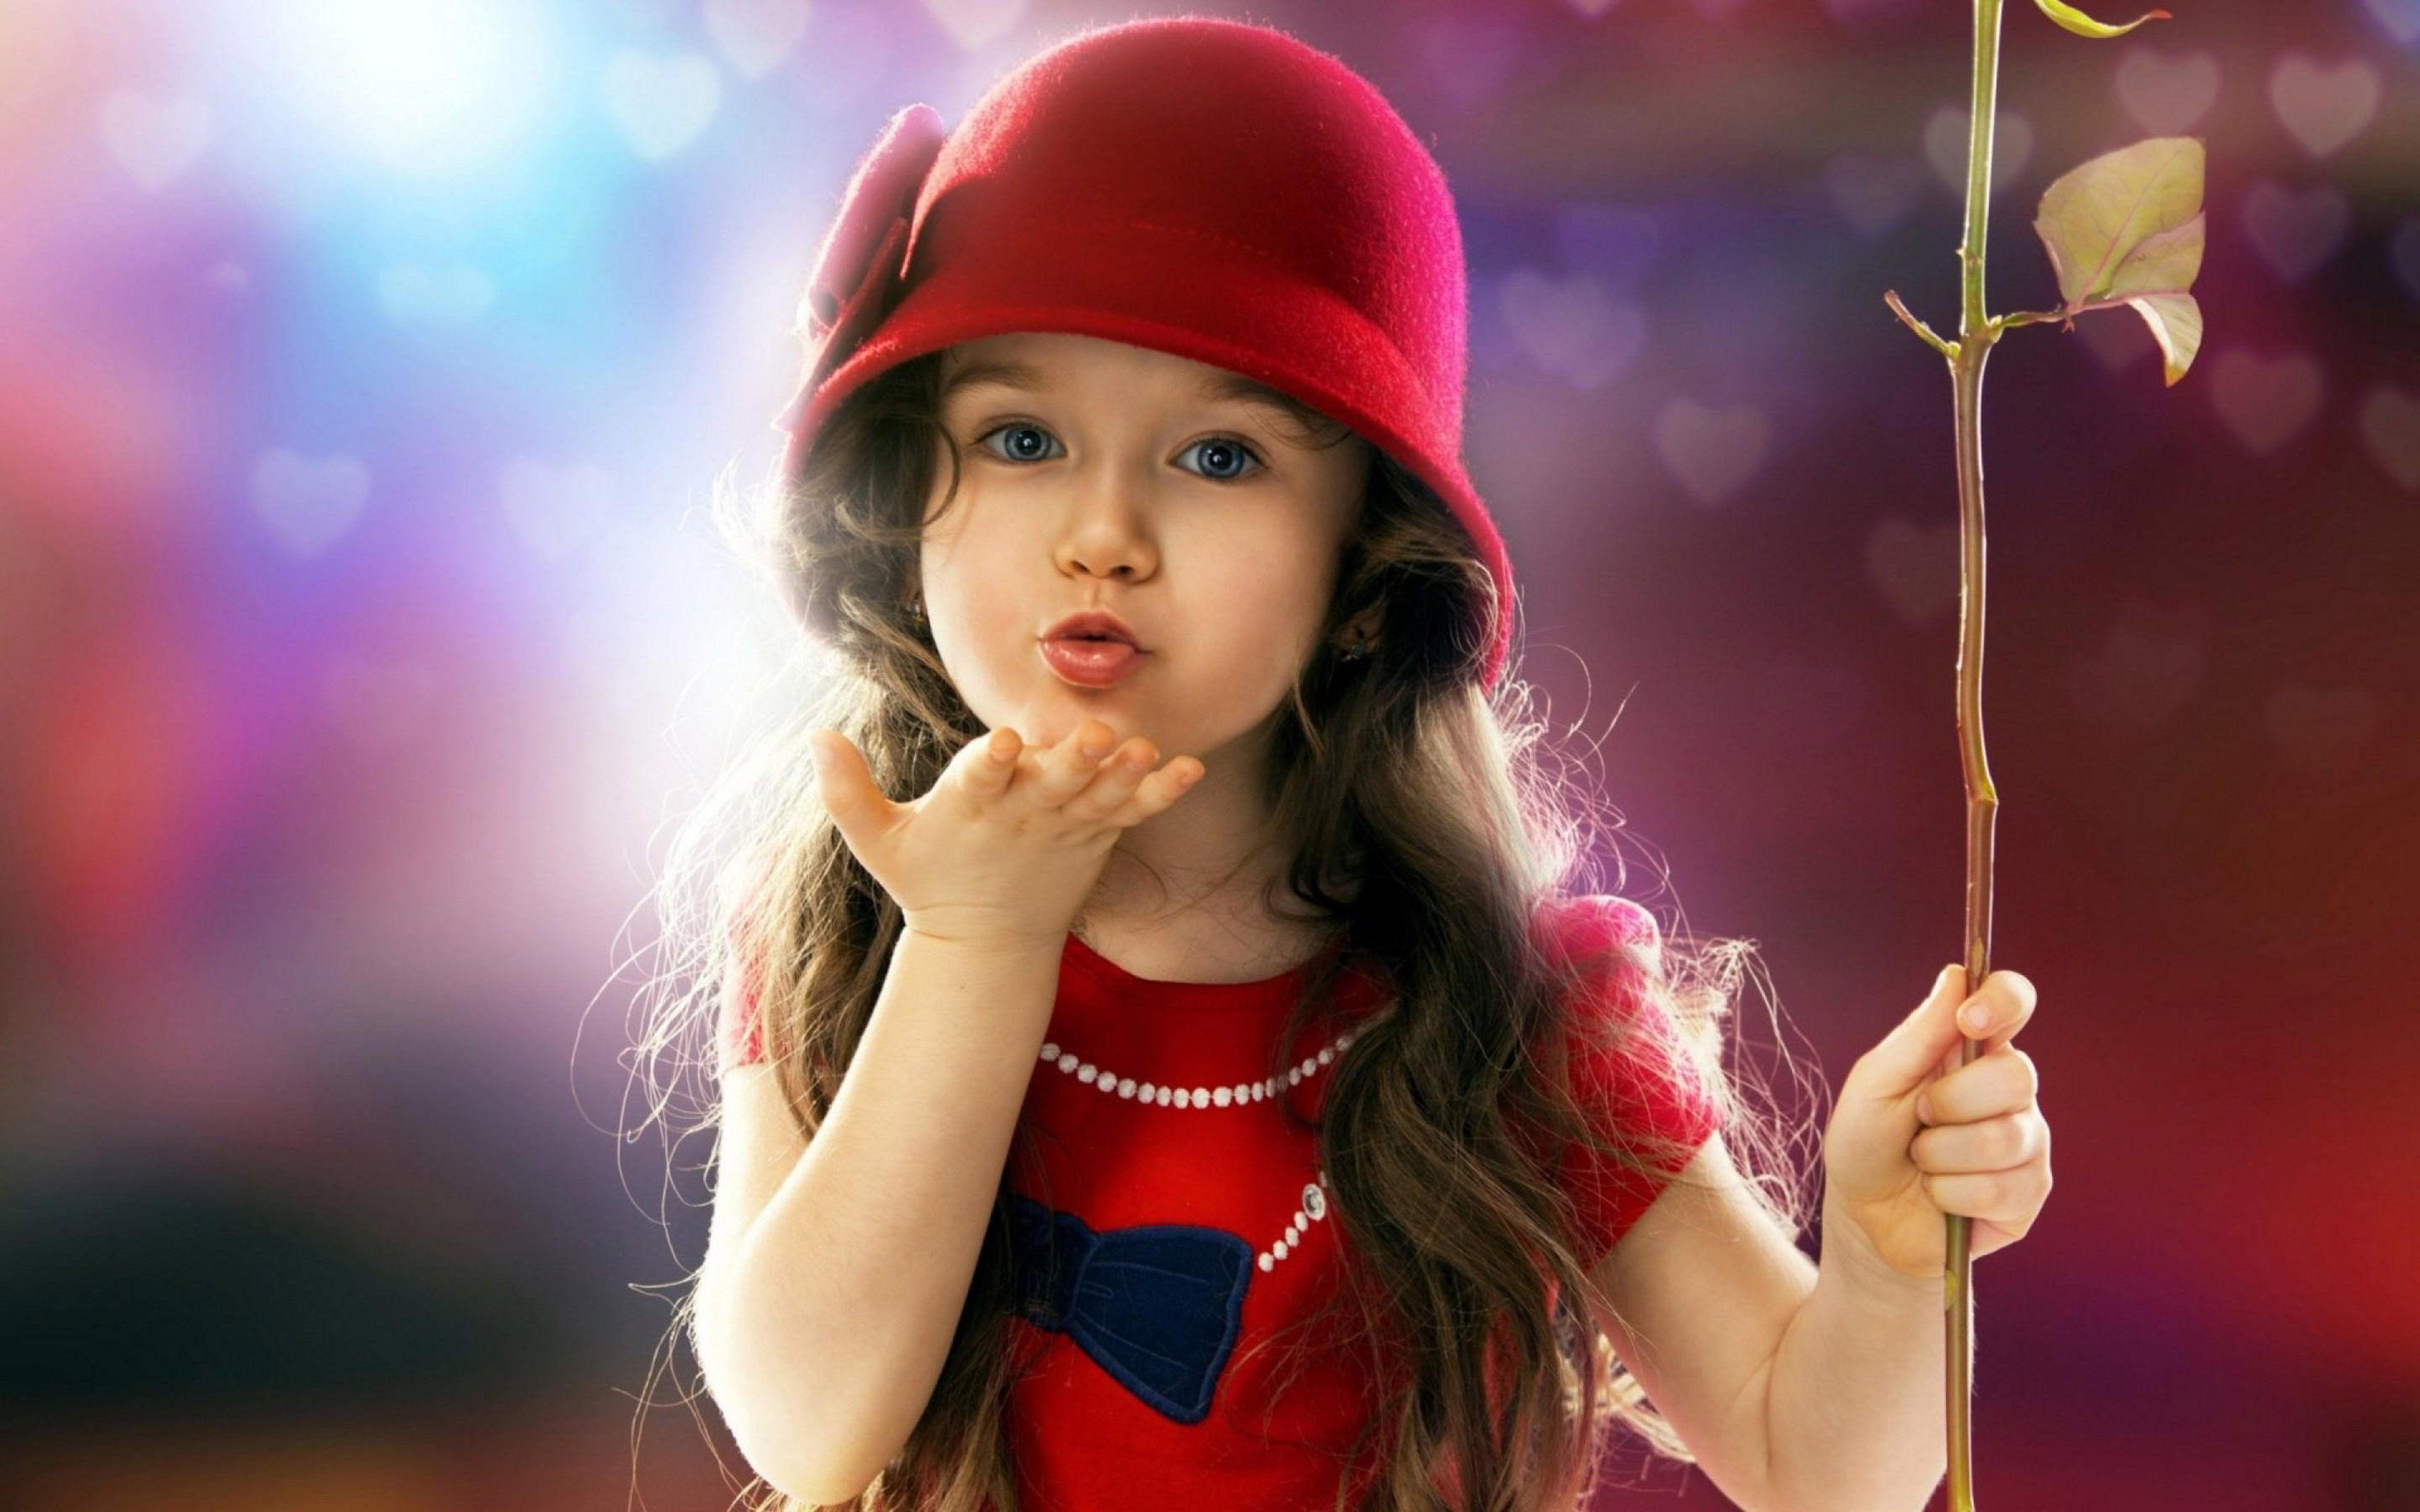 desktophdwallpaper.org. Cute baby girl wallpaper, Cute red dresses, Cute baby girl